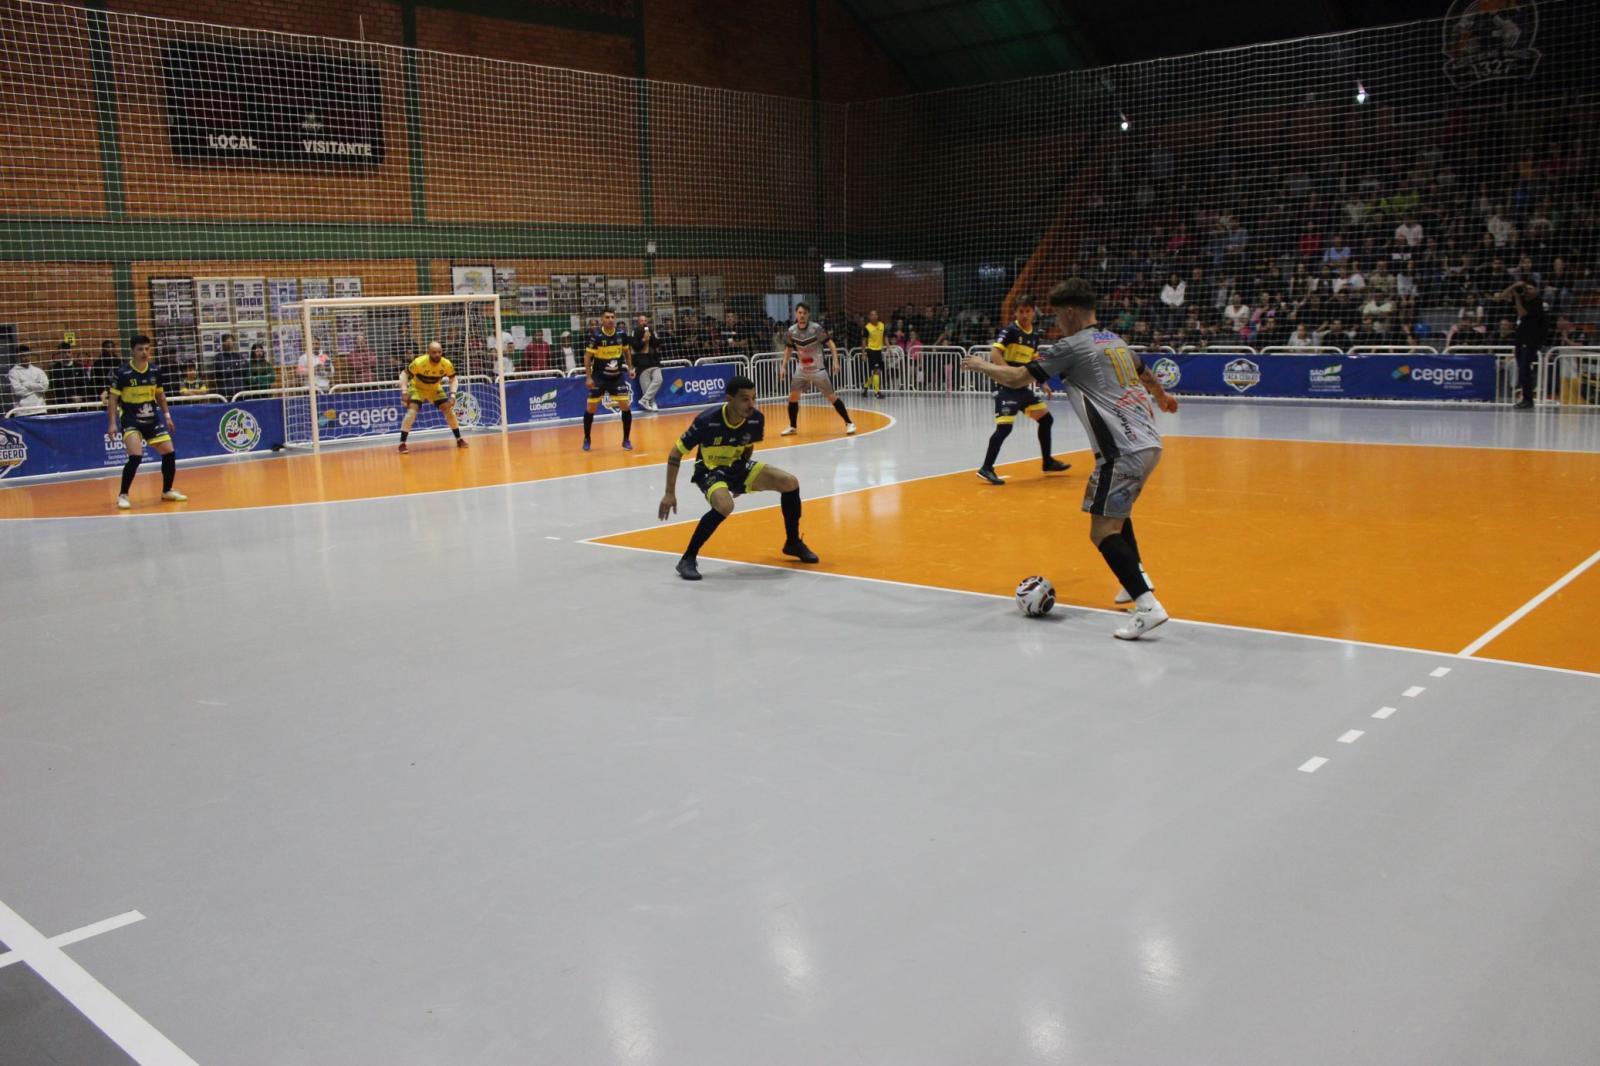 Cuzidos e Apec empatam e Consulado do Tigre vence o Resenha na abertura do Campeonato de Futsal...